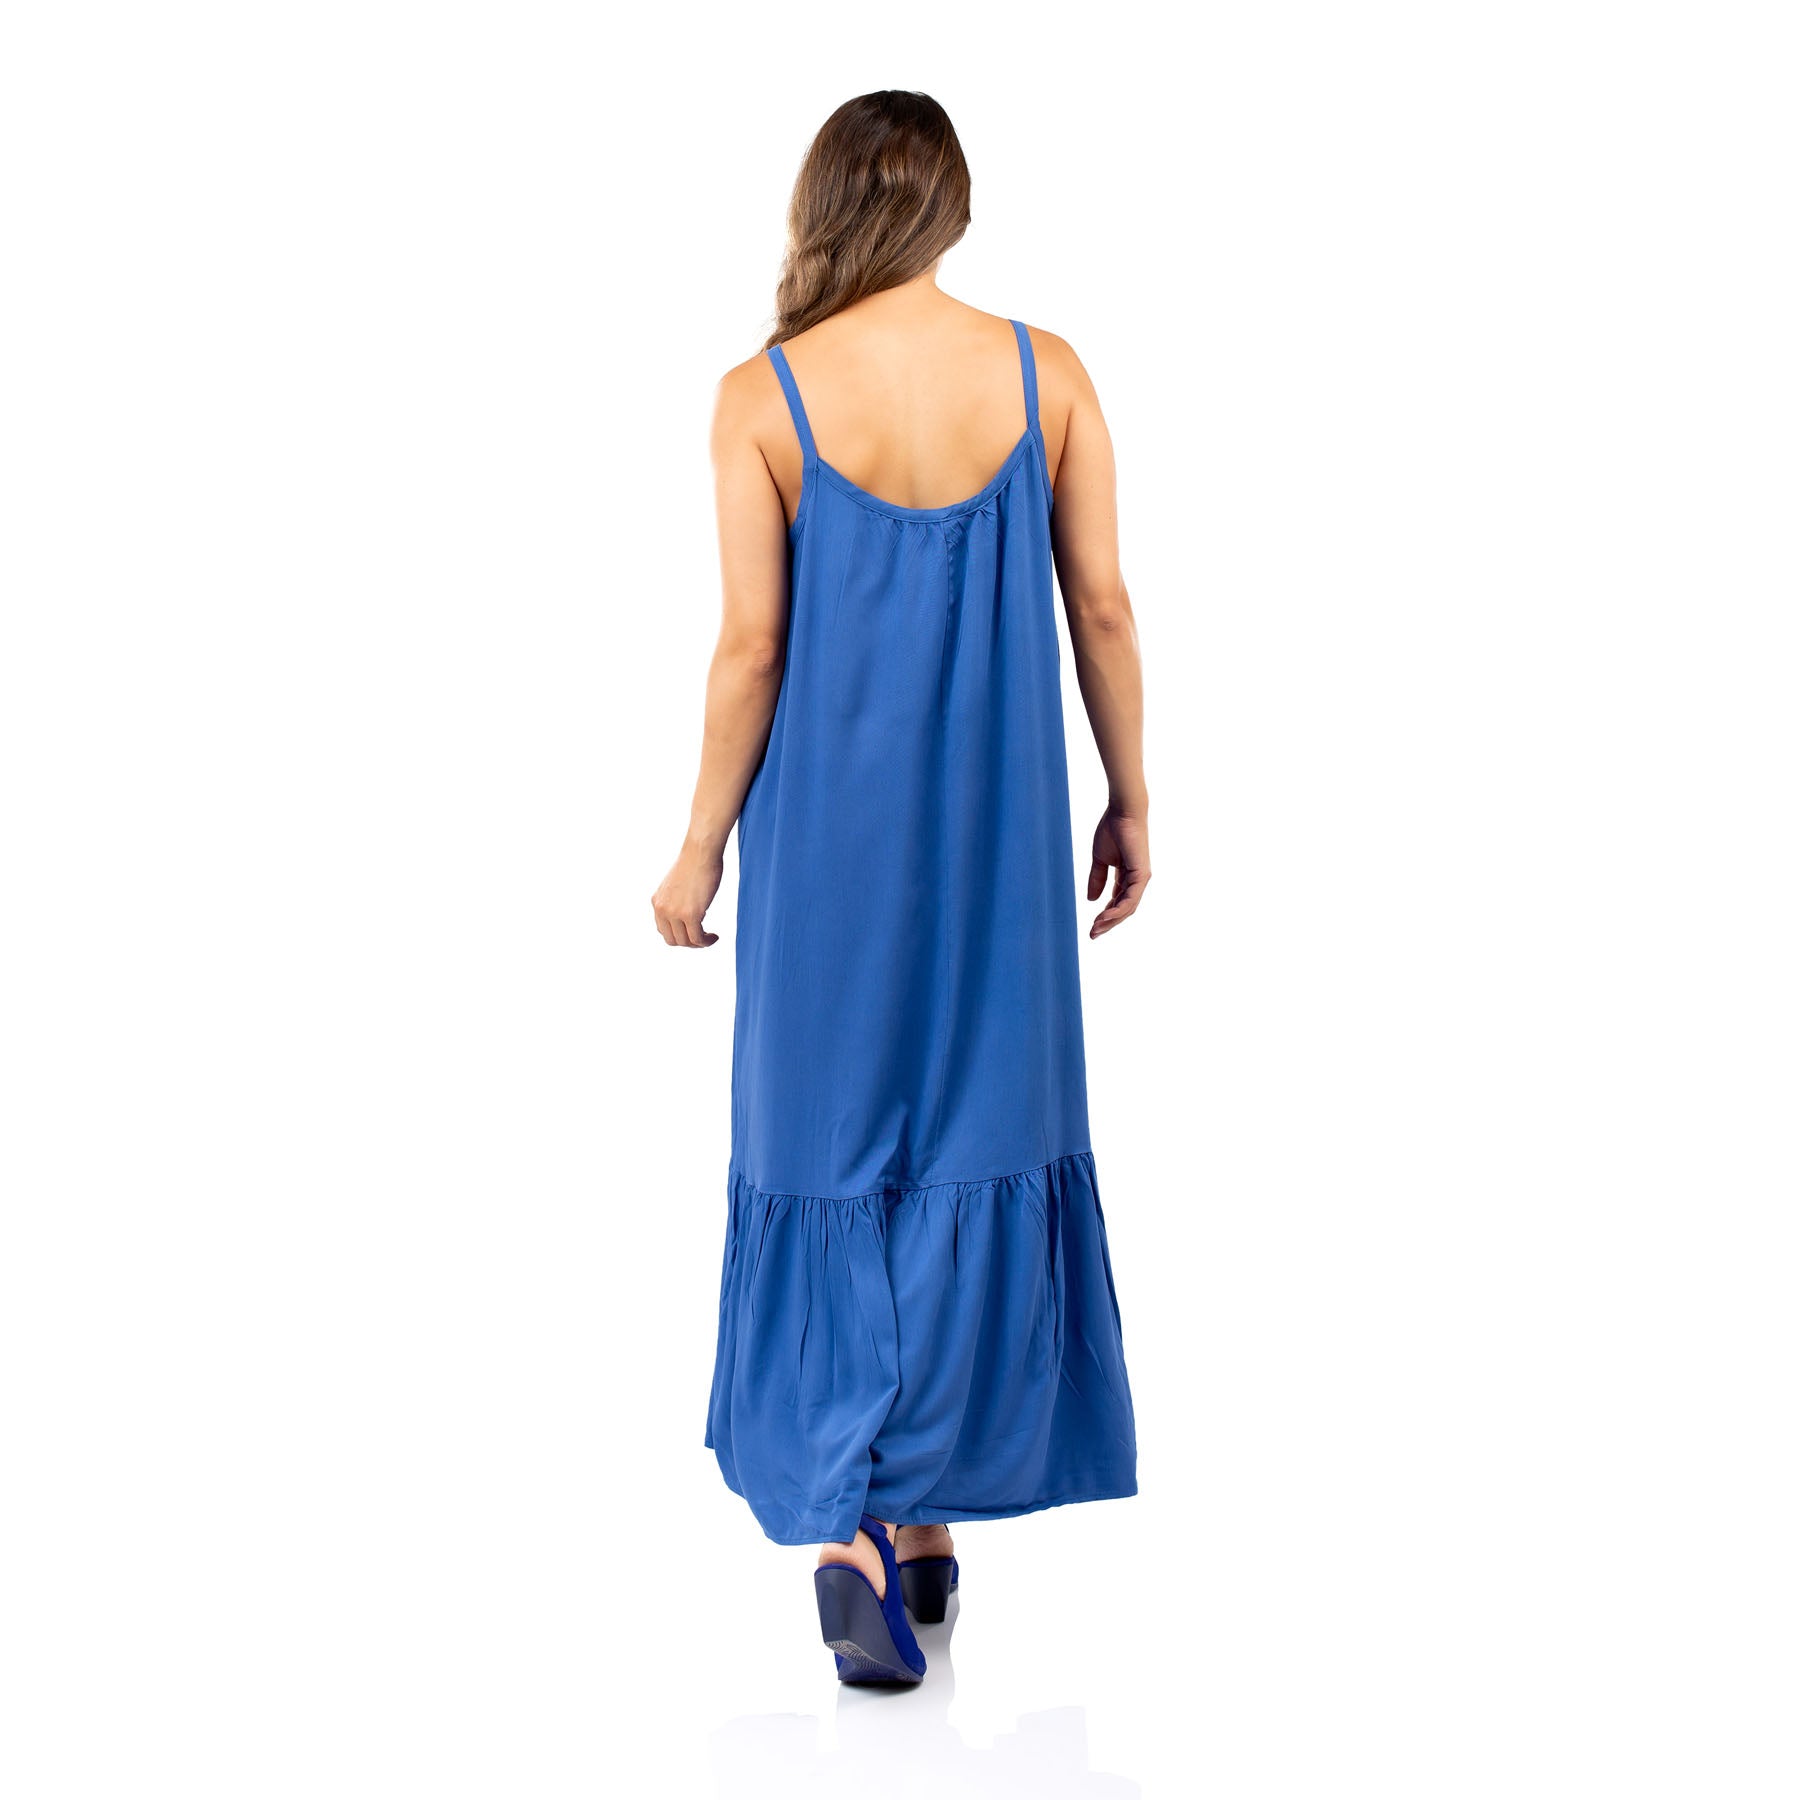 Irma Dress - Light Blue - CHIC & SIMPLE